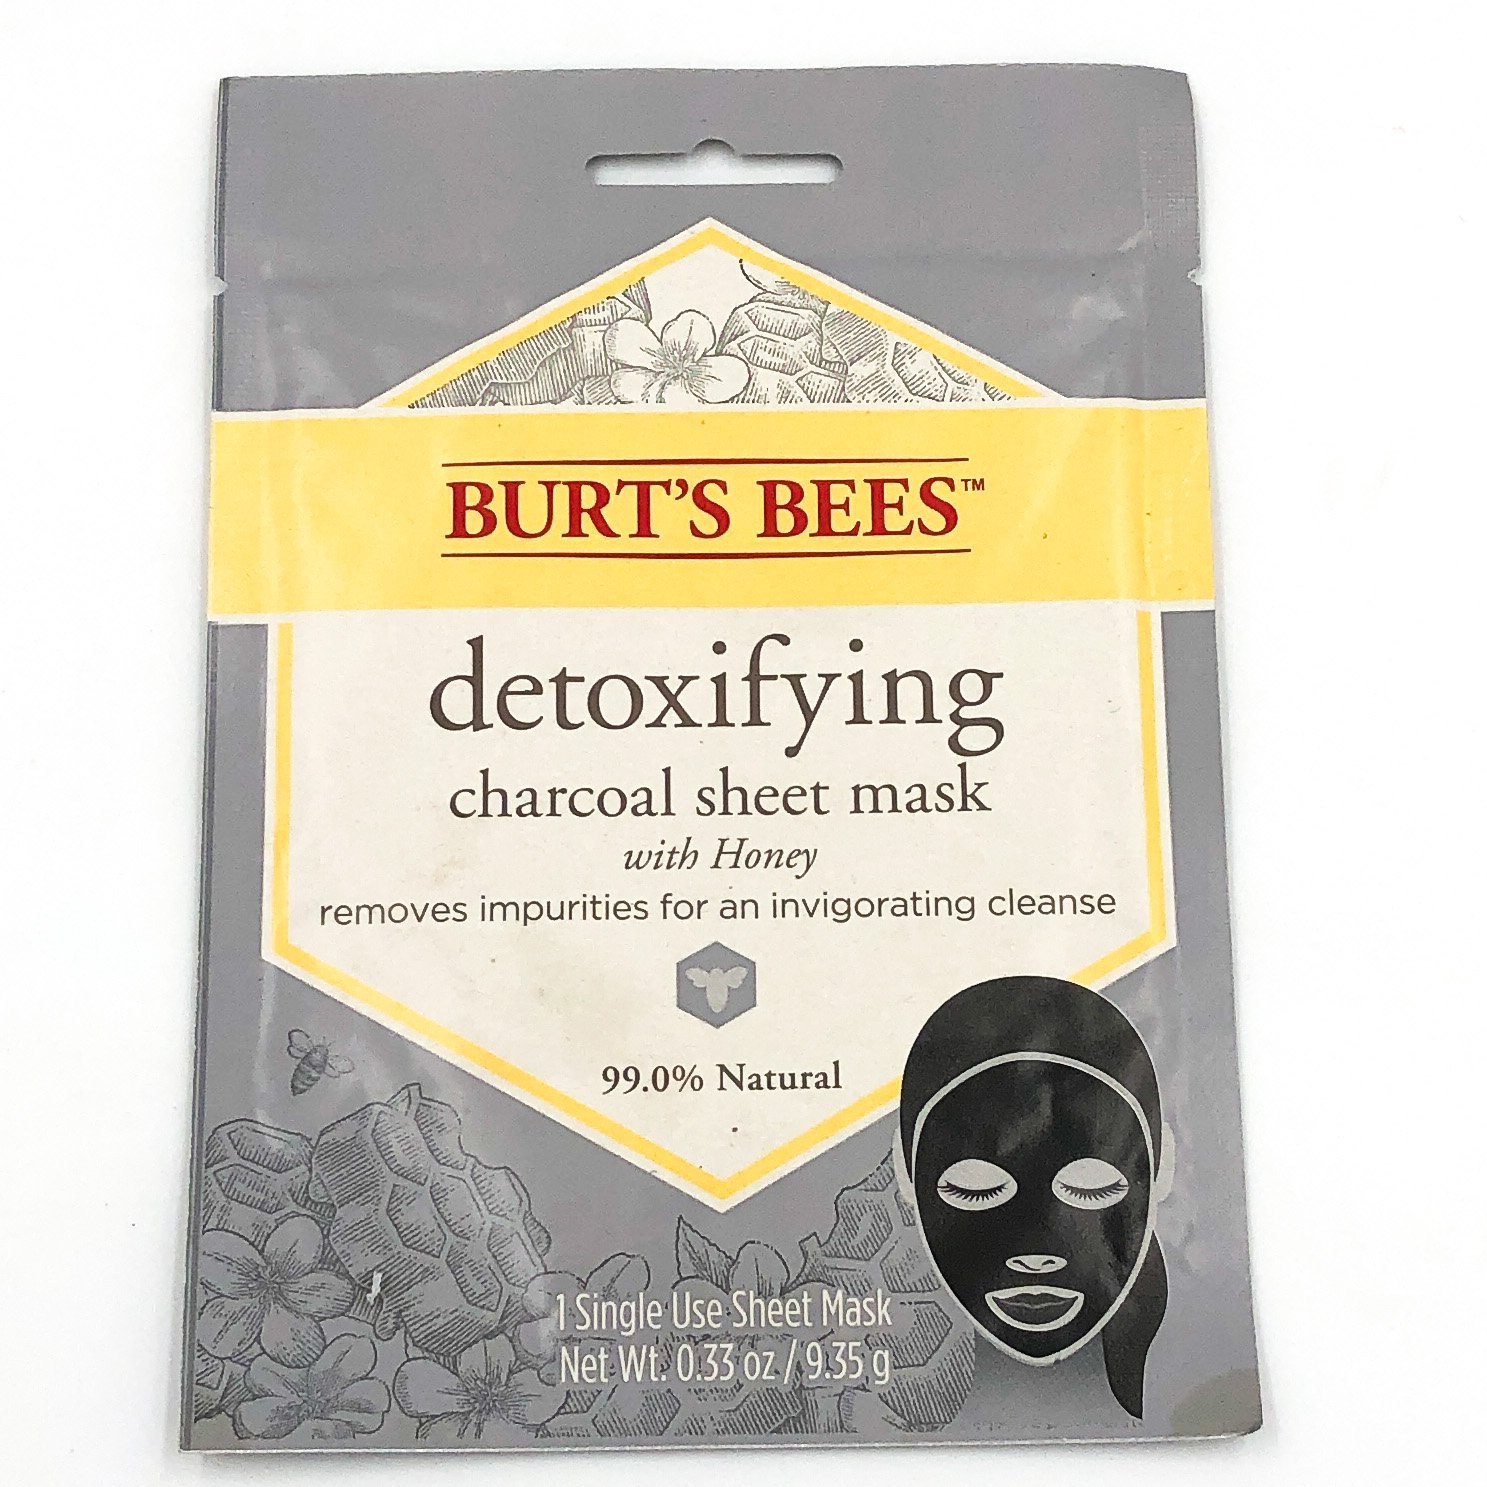 Burt’s Bees Detoxifying Charcoal Sheet Mask with Honey